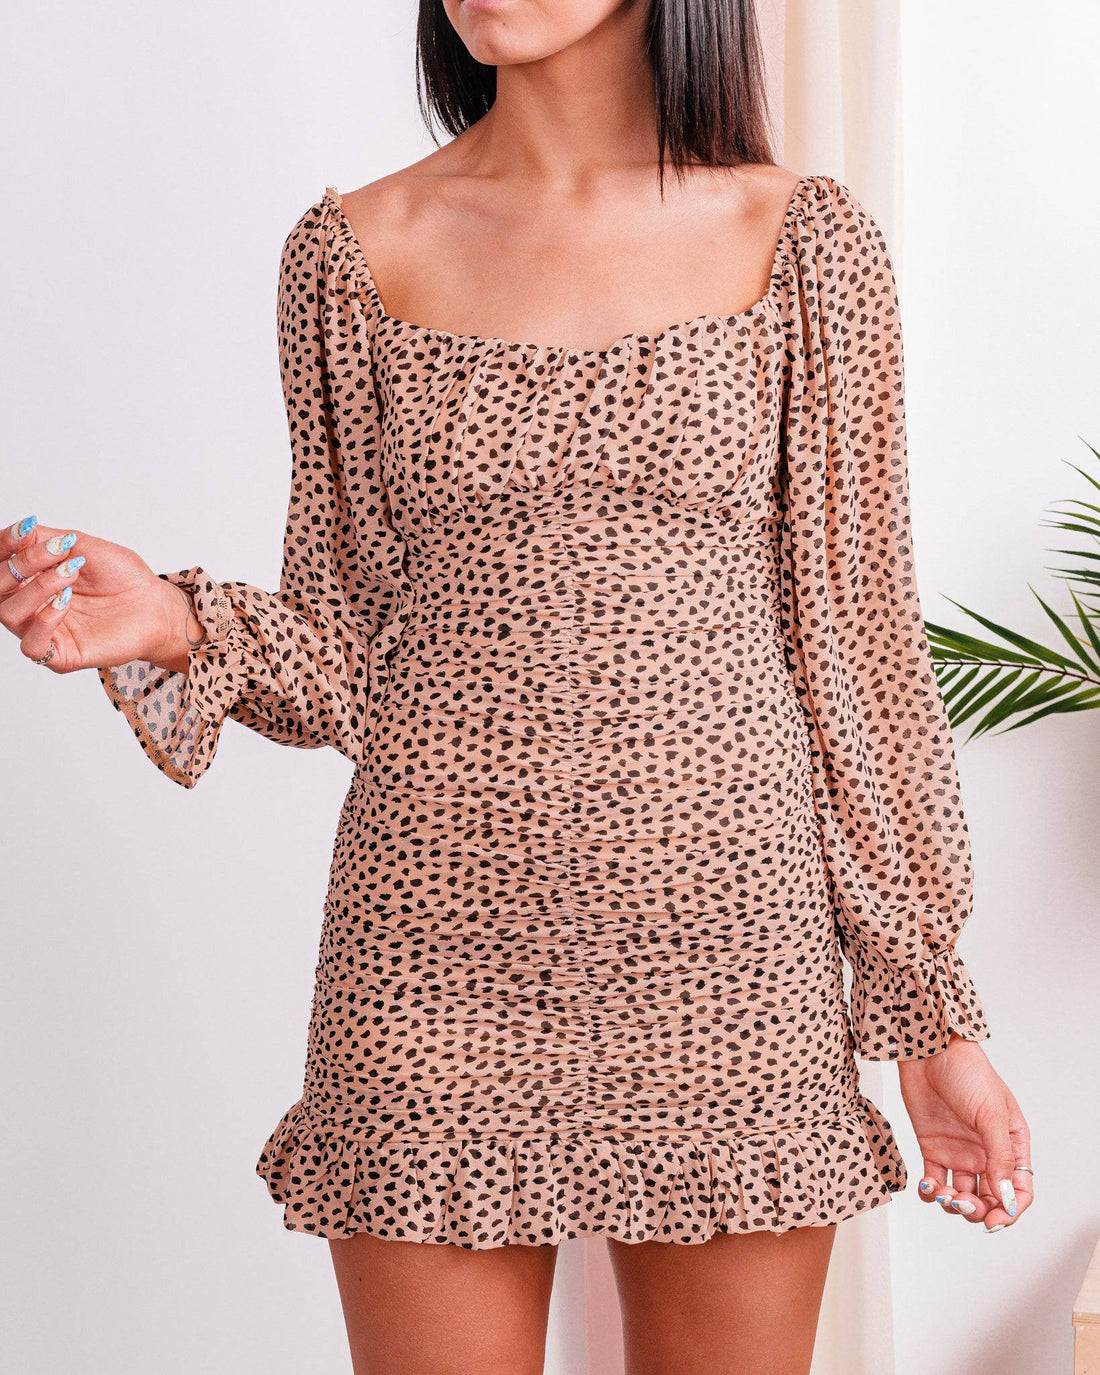 Meet You Later Cheetah Print Mini Dress